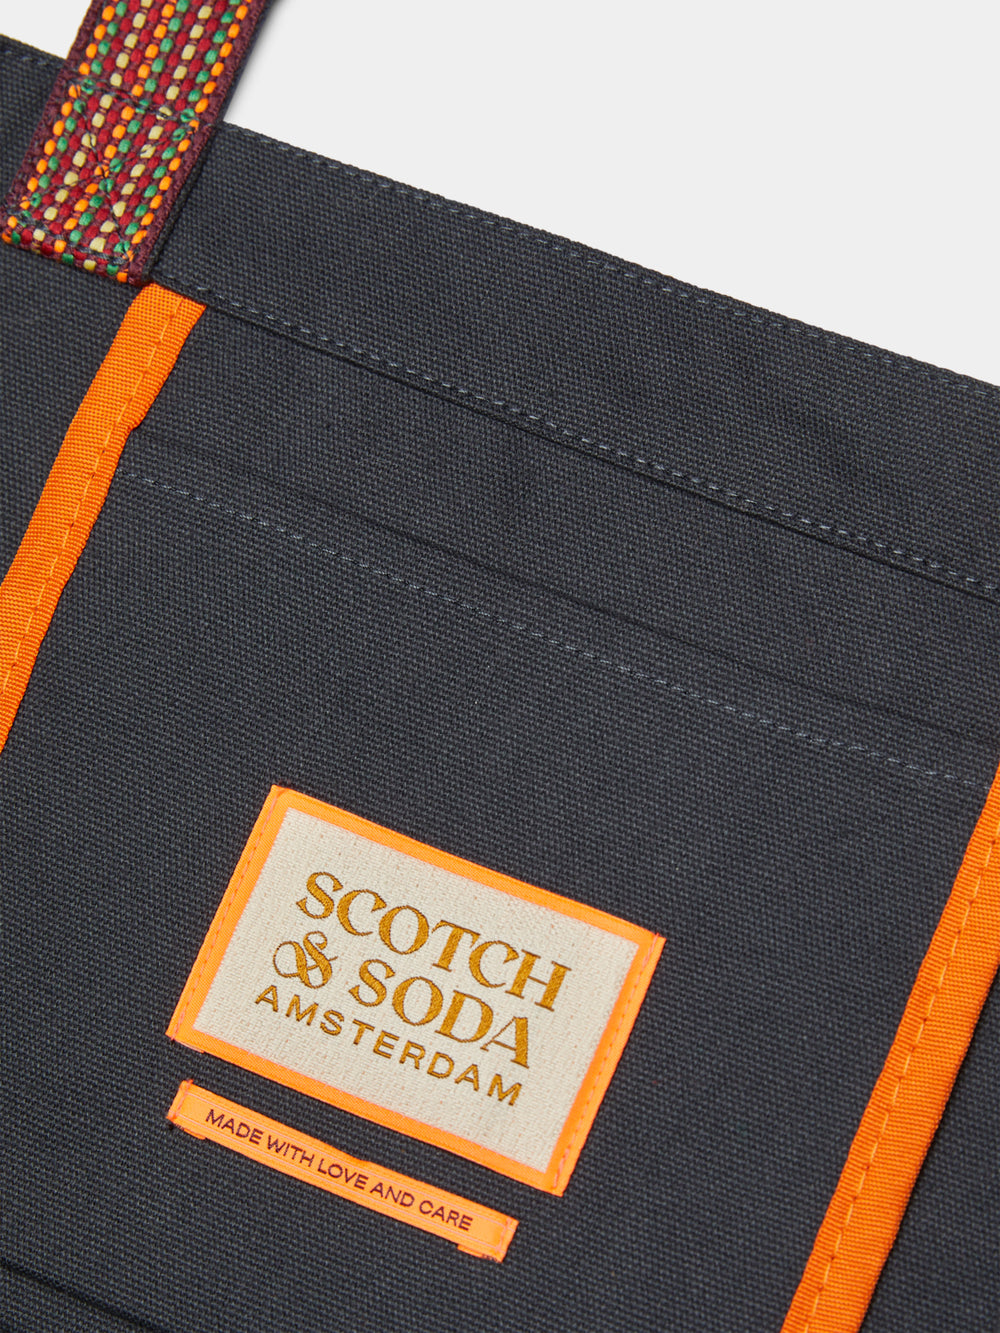 Canvas artwork tote bag - Scotch & Soda AU